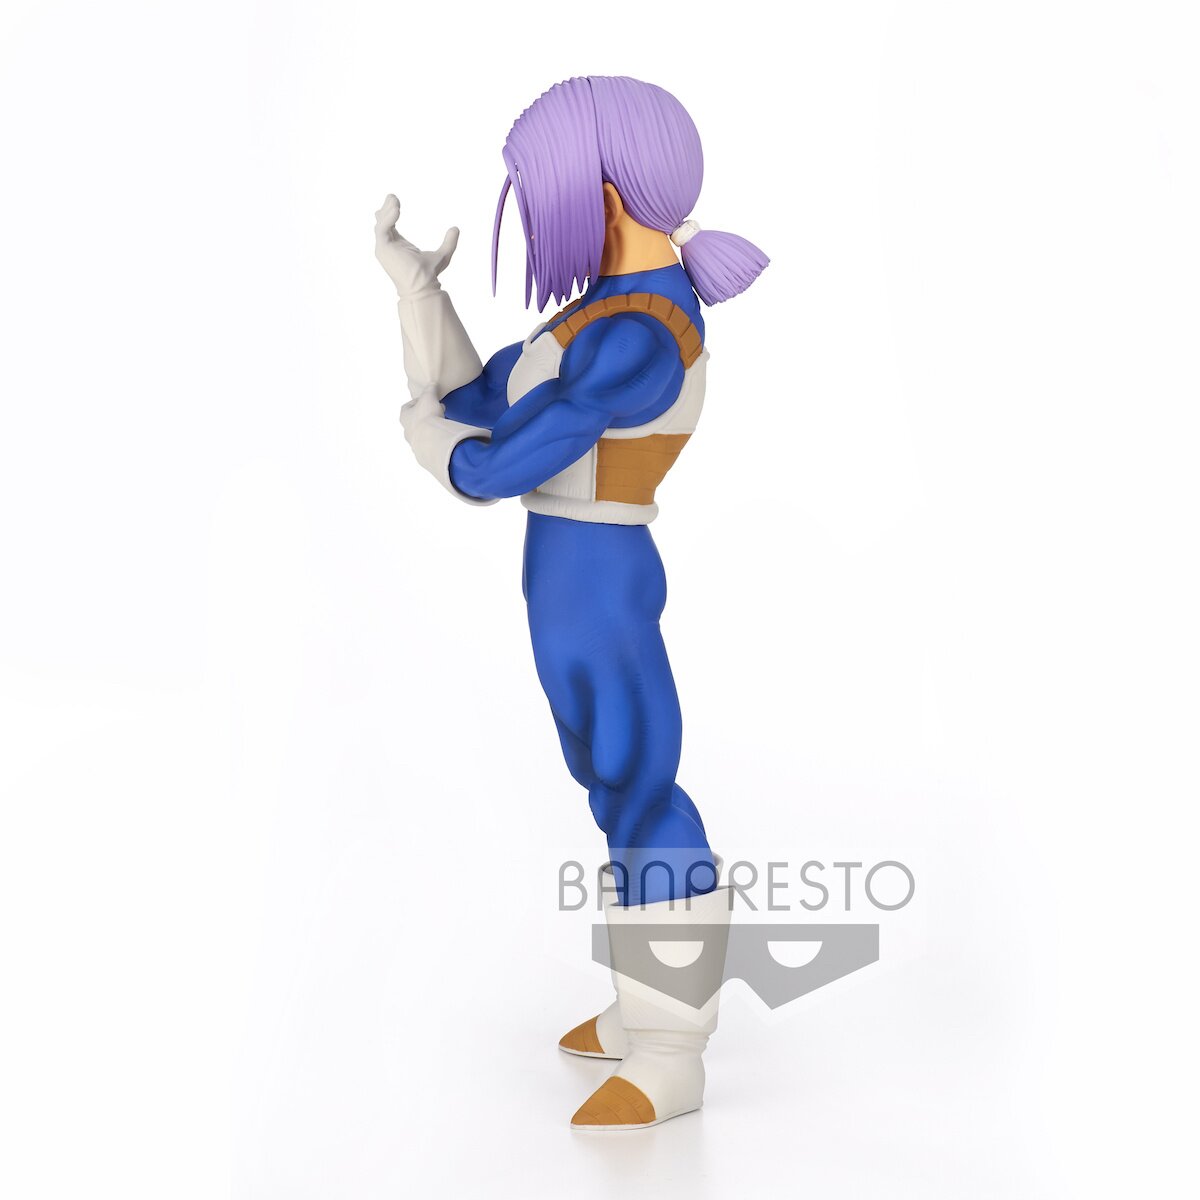 Dragon Ball Z Figure Future Trunks Saiyan Armor Anime Figure